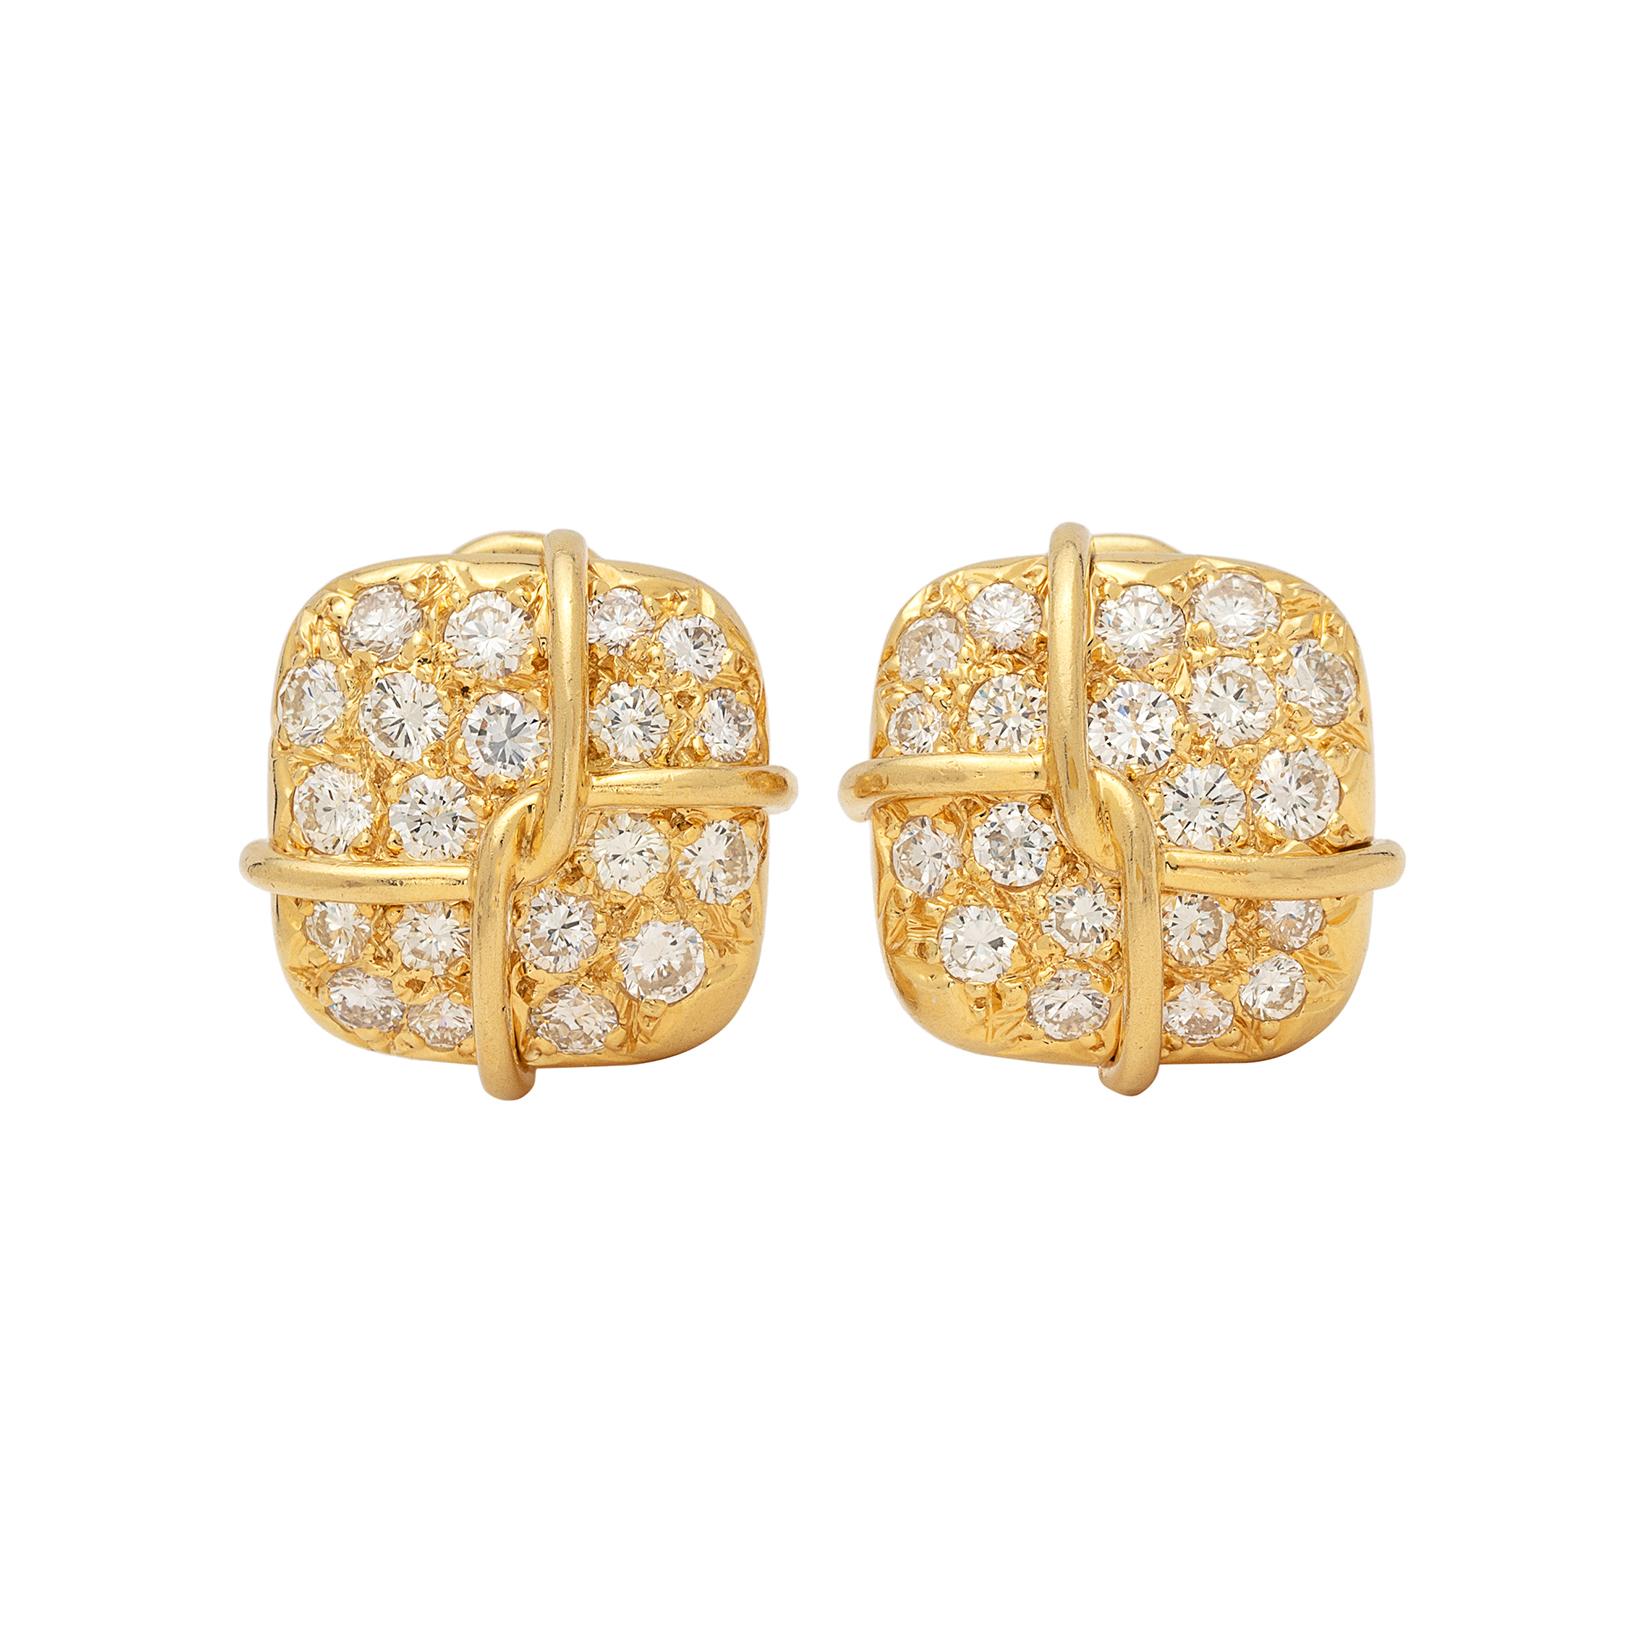 Jose Hess Diamond and 18 Karat Gold Earrings